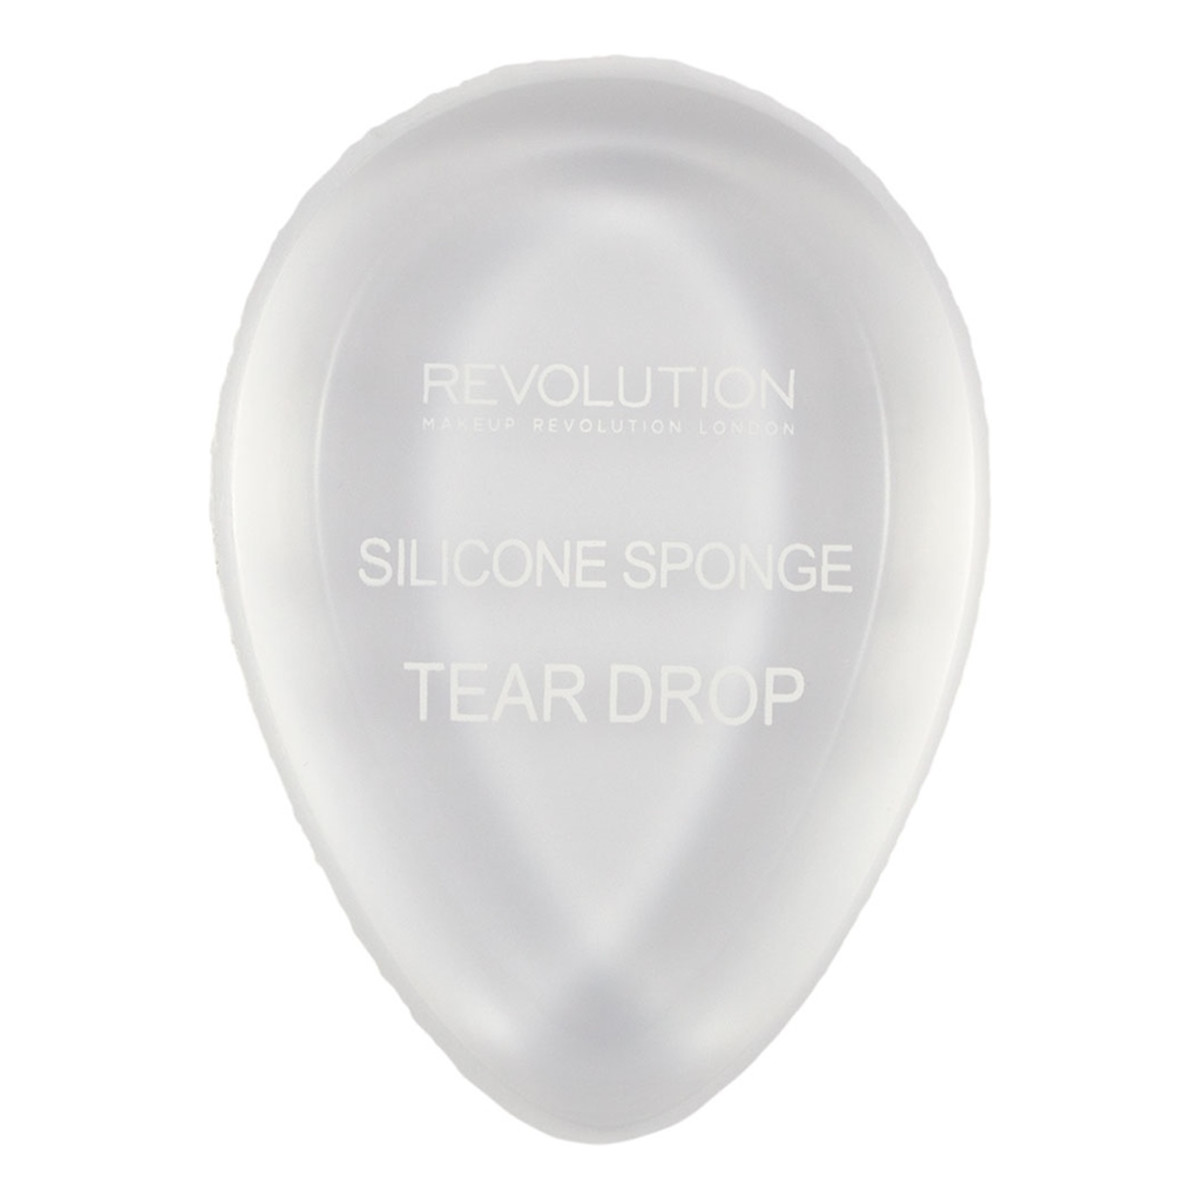 Makeup Revolution Tear Drop Silicone Sponge silikonowa gąbka do makijażu